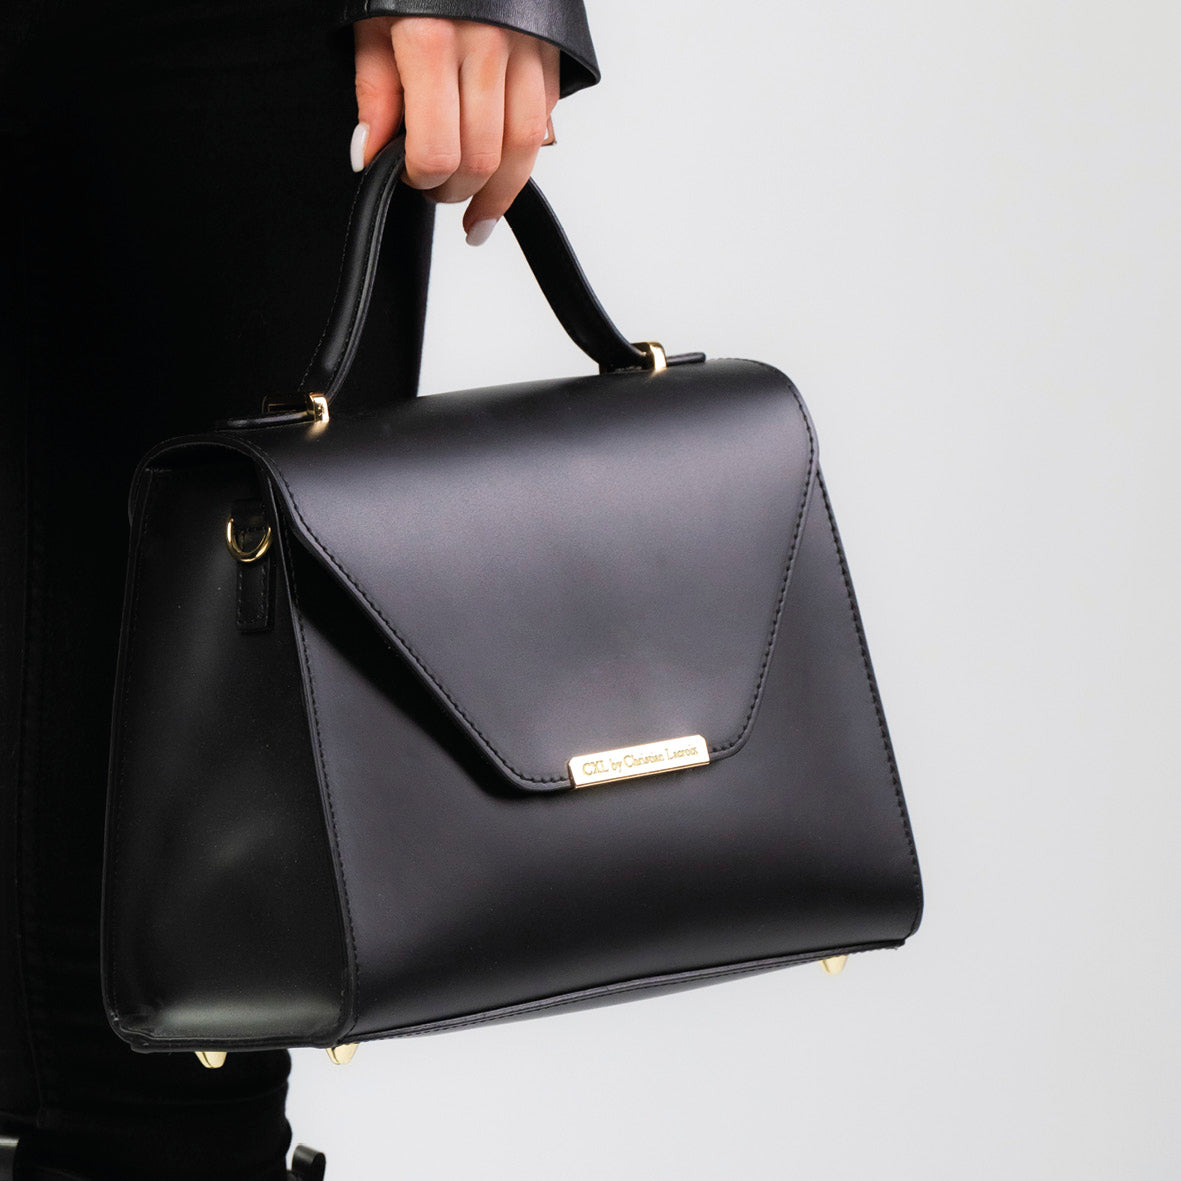 Leather handbag - Saint Germain